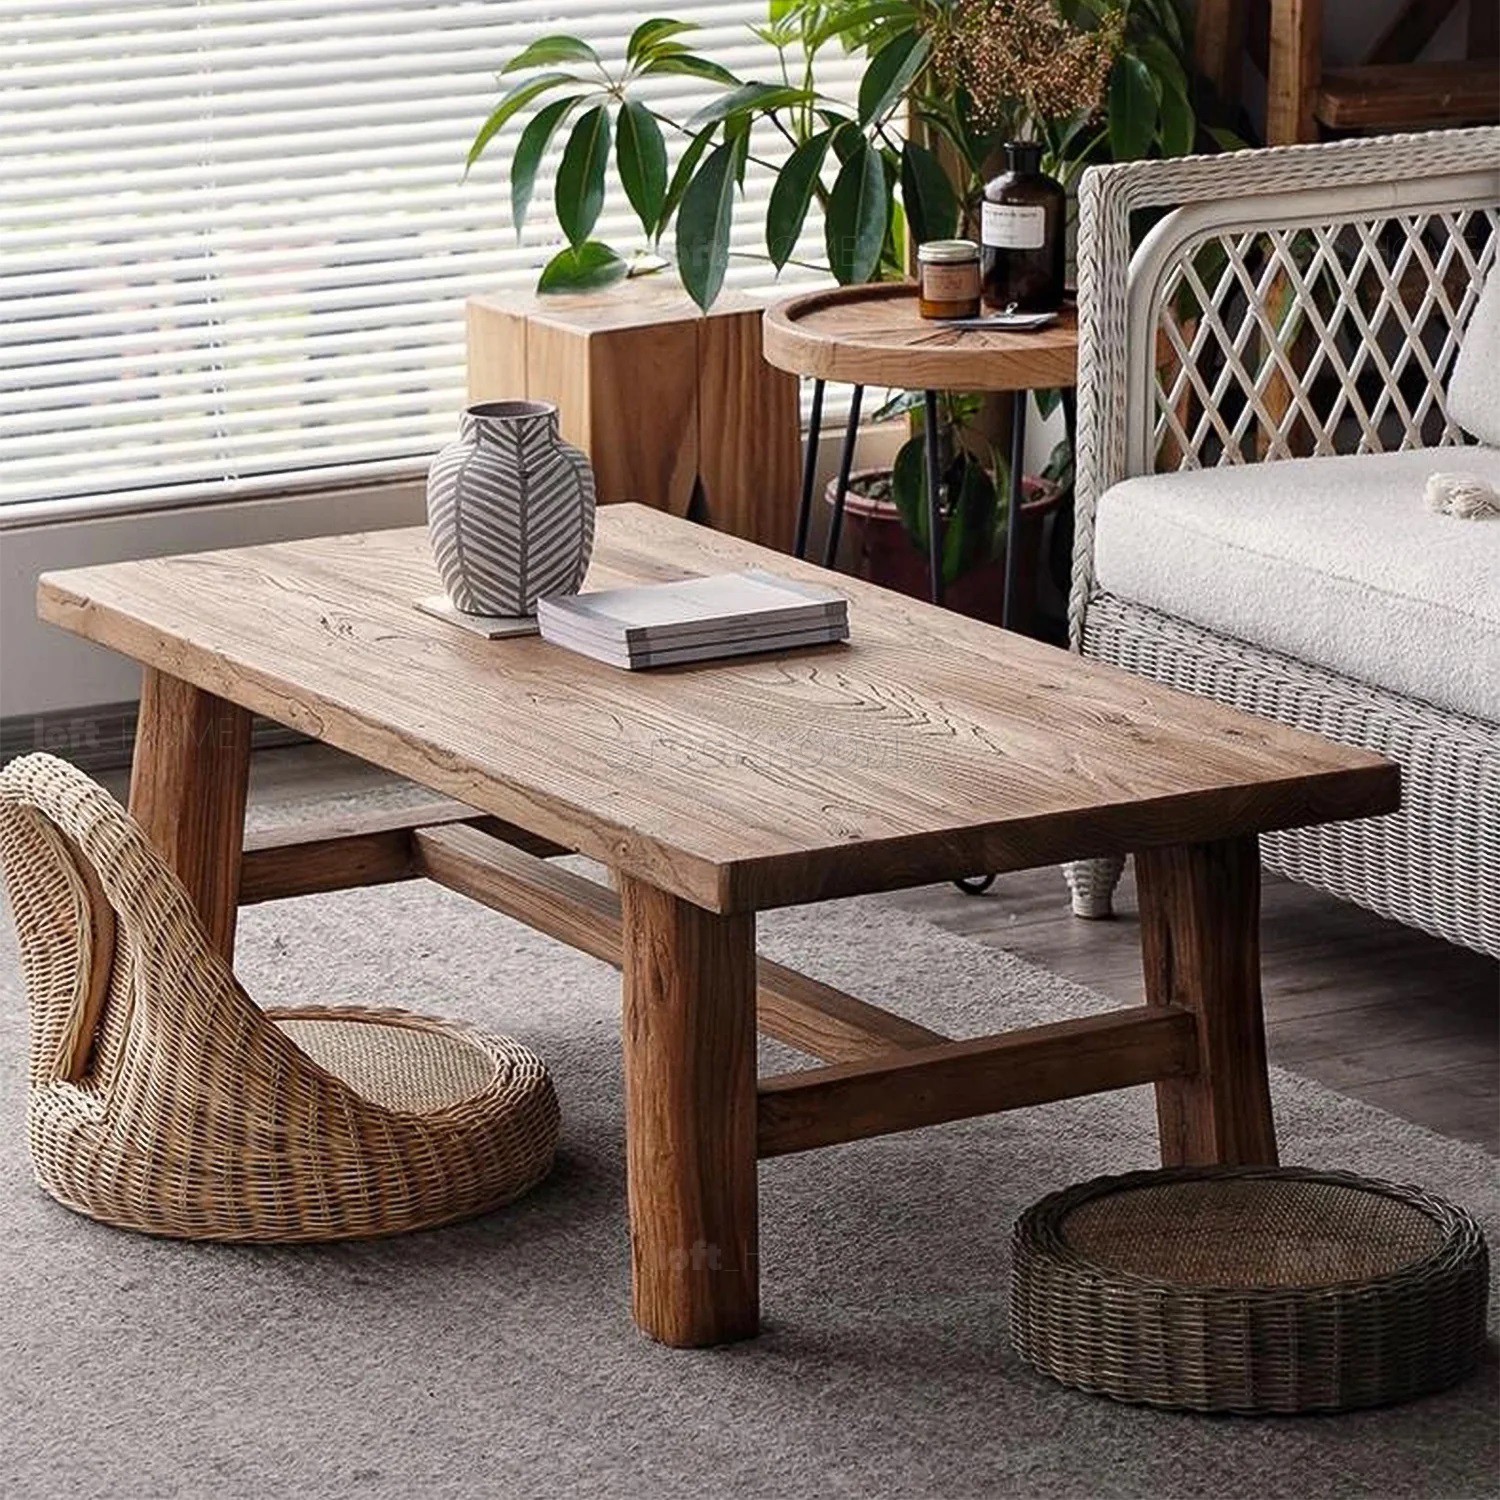 Mikado Rustic Elm Wood Coffee Table